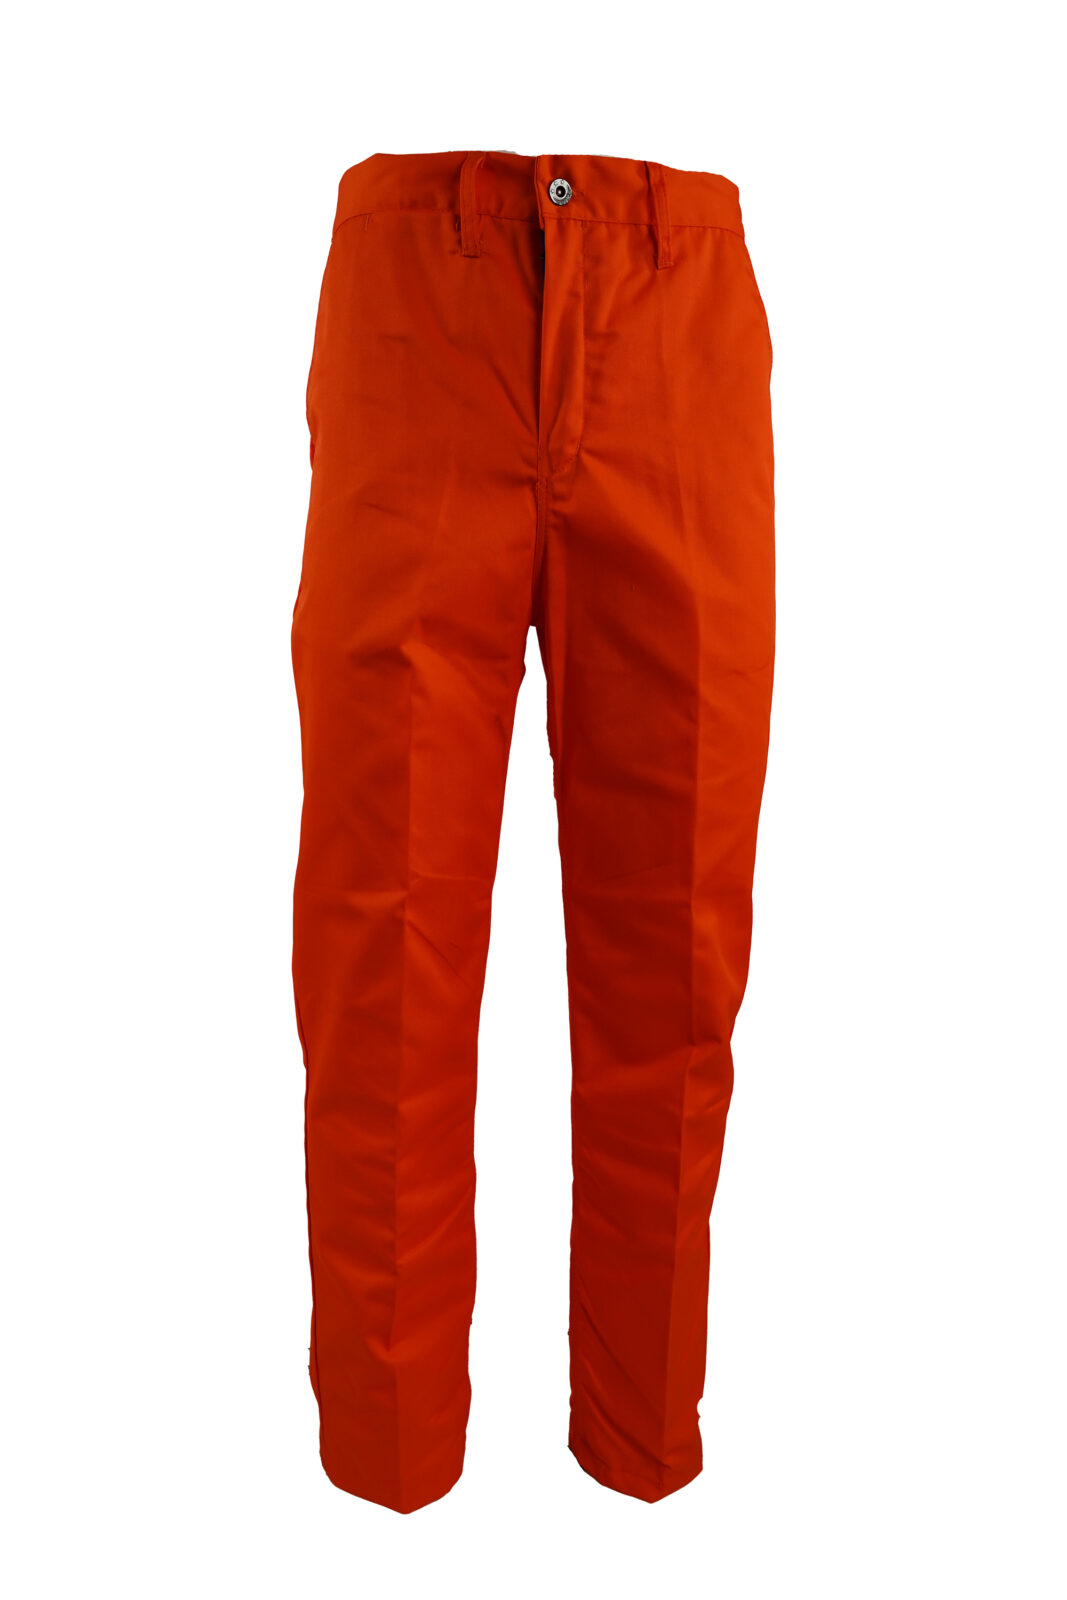 Titan Workwear Orange Conti Trouser - Santon Workwear